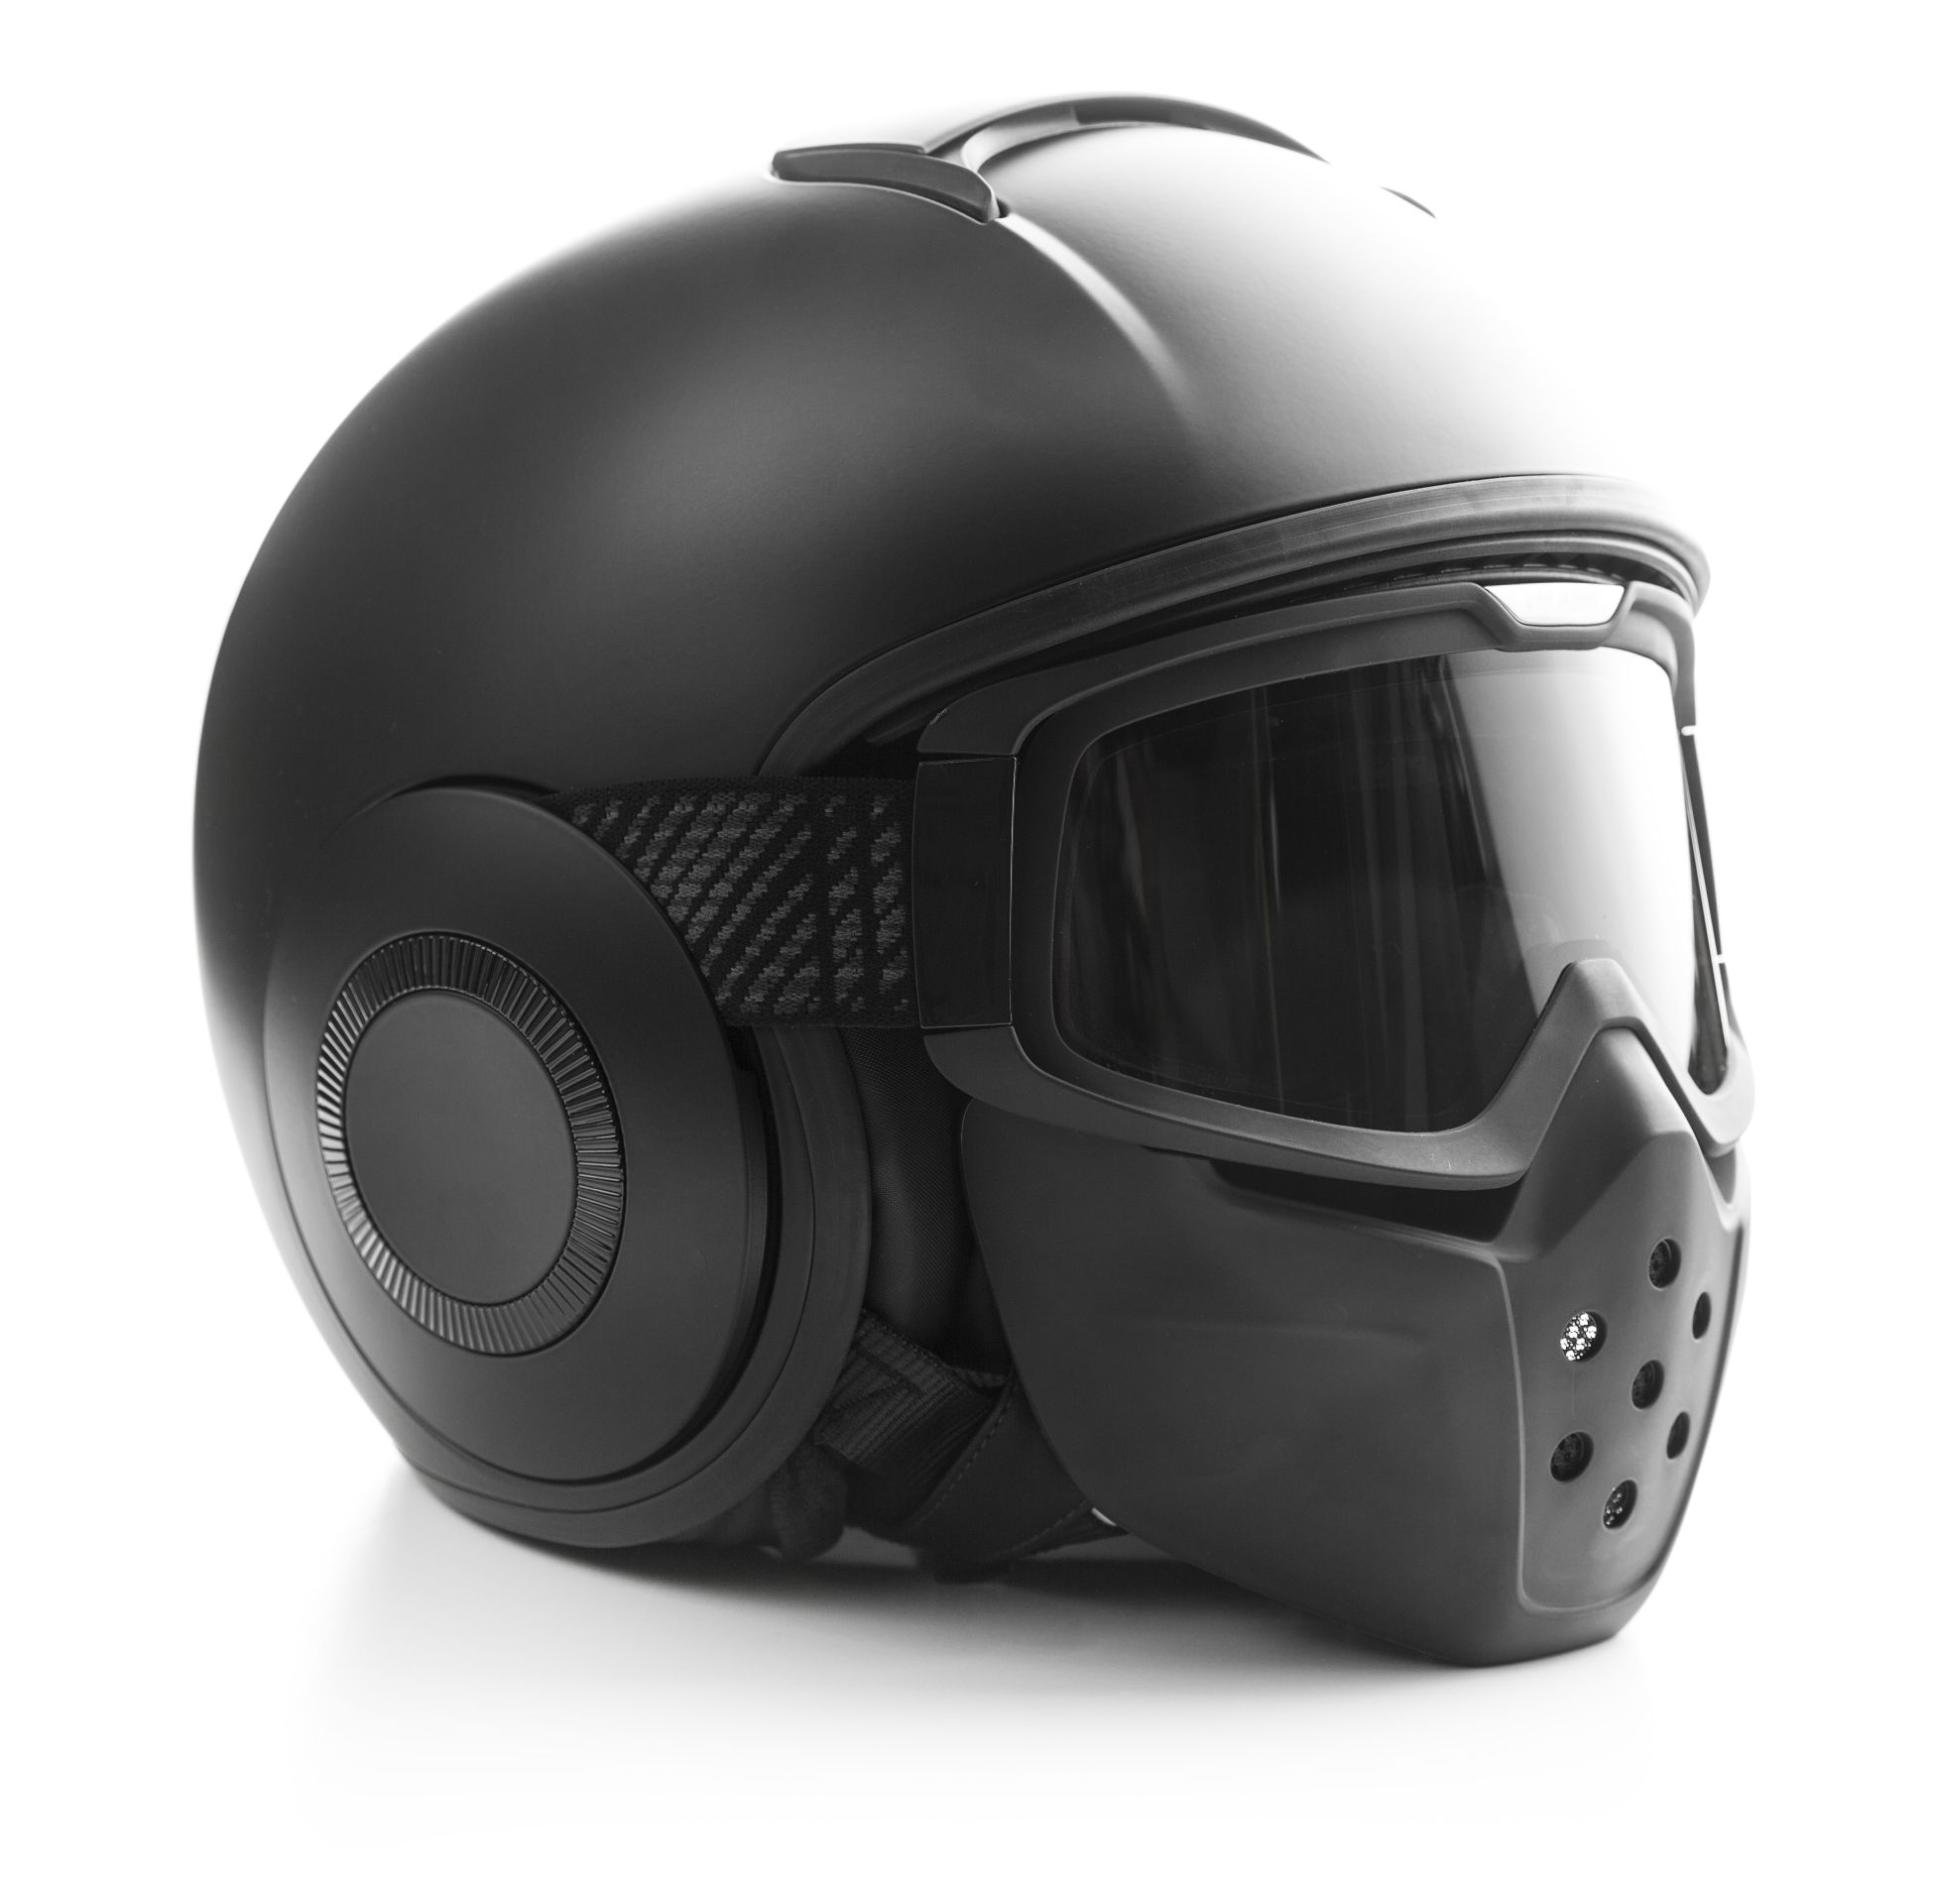 Carbon helmet